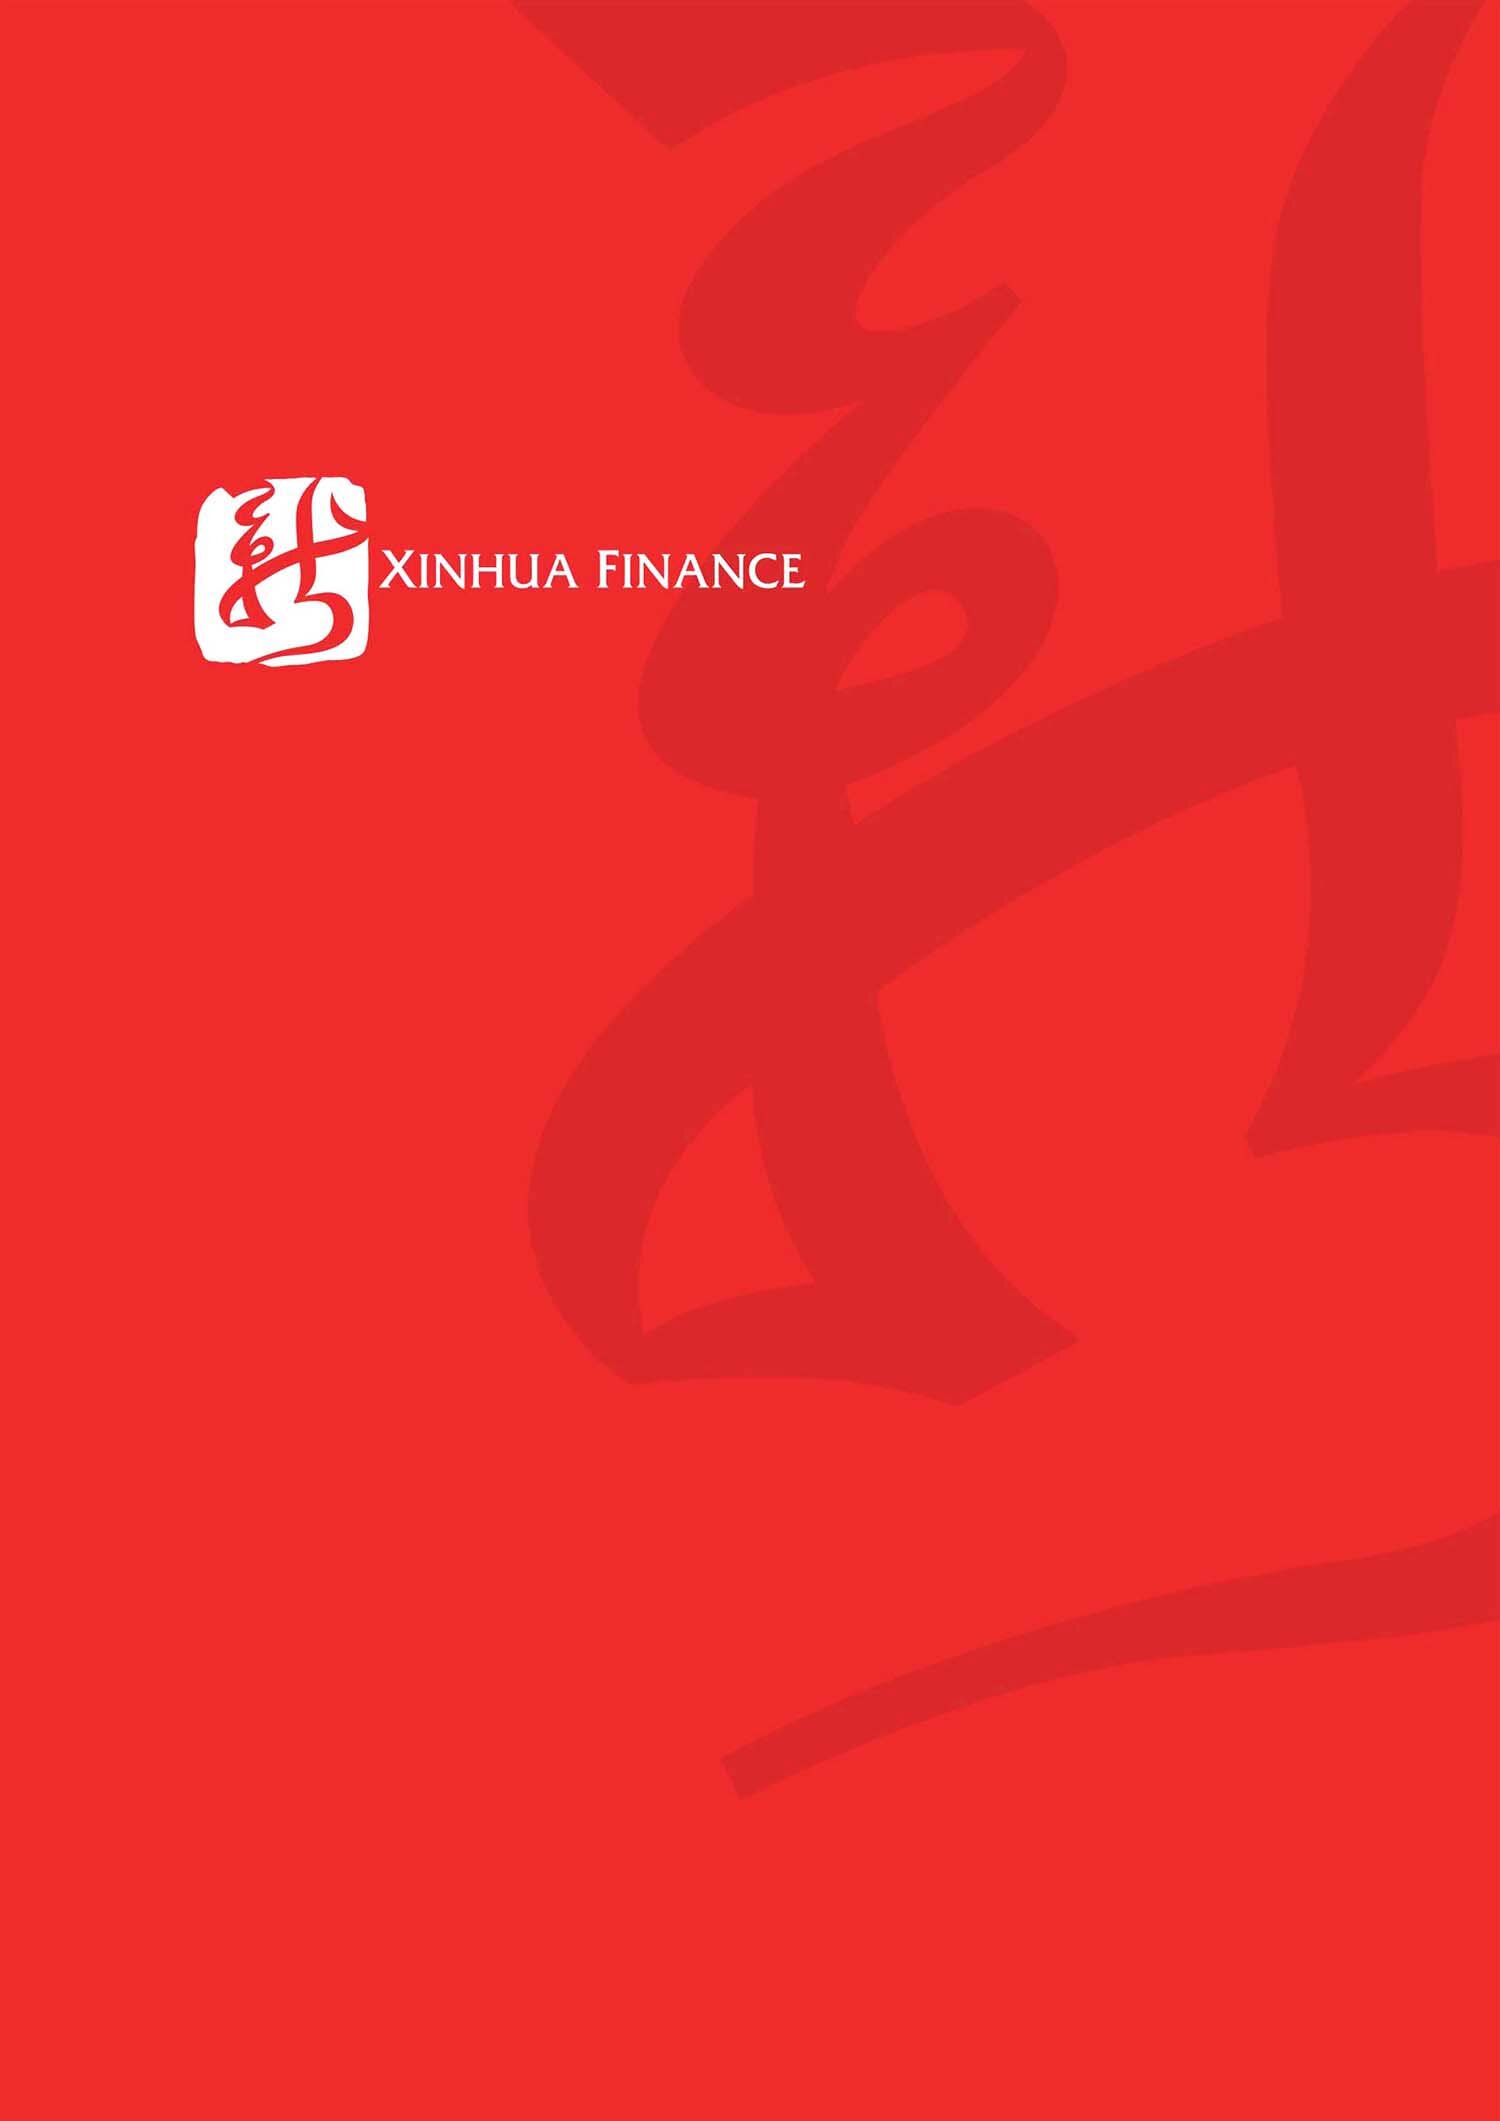 METERA Branding-Xinhua Finance-Logo.png